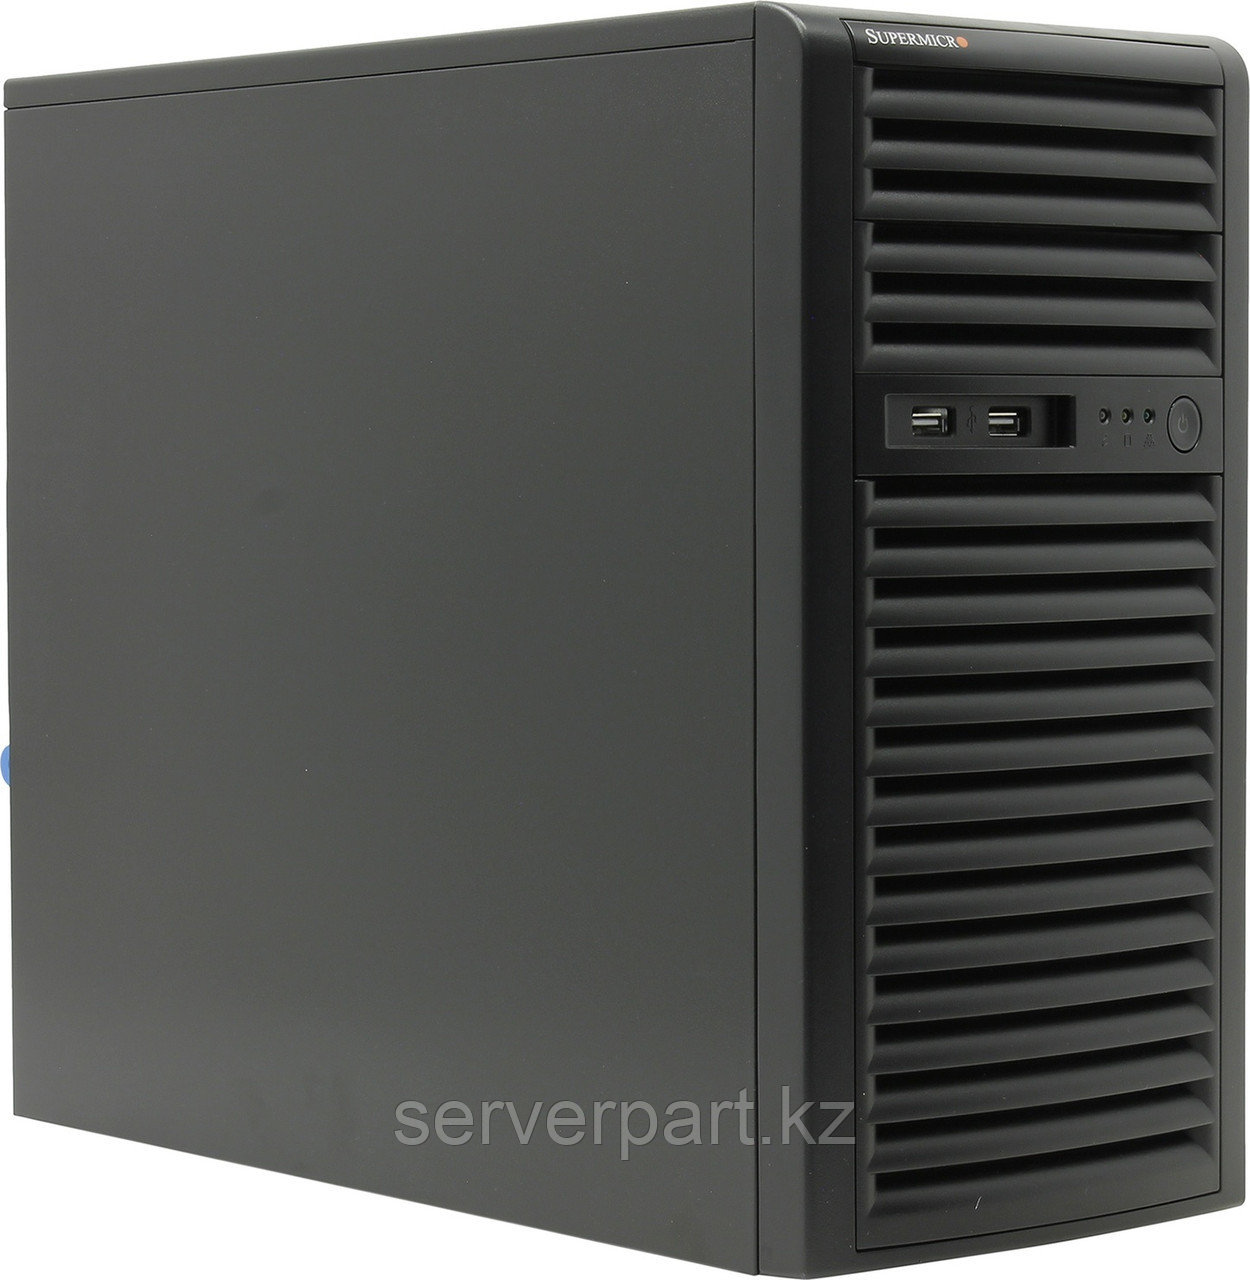 Сервер Supermicro SYS-5039C Tower 4LFF/4-core intel xeon E2124 3.3GHz/32GB UDIMM nECC/1x480GB SSD MU Hyb, фото 1